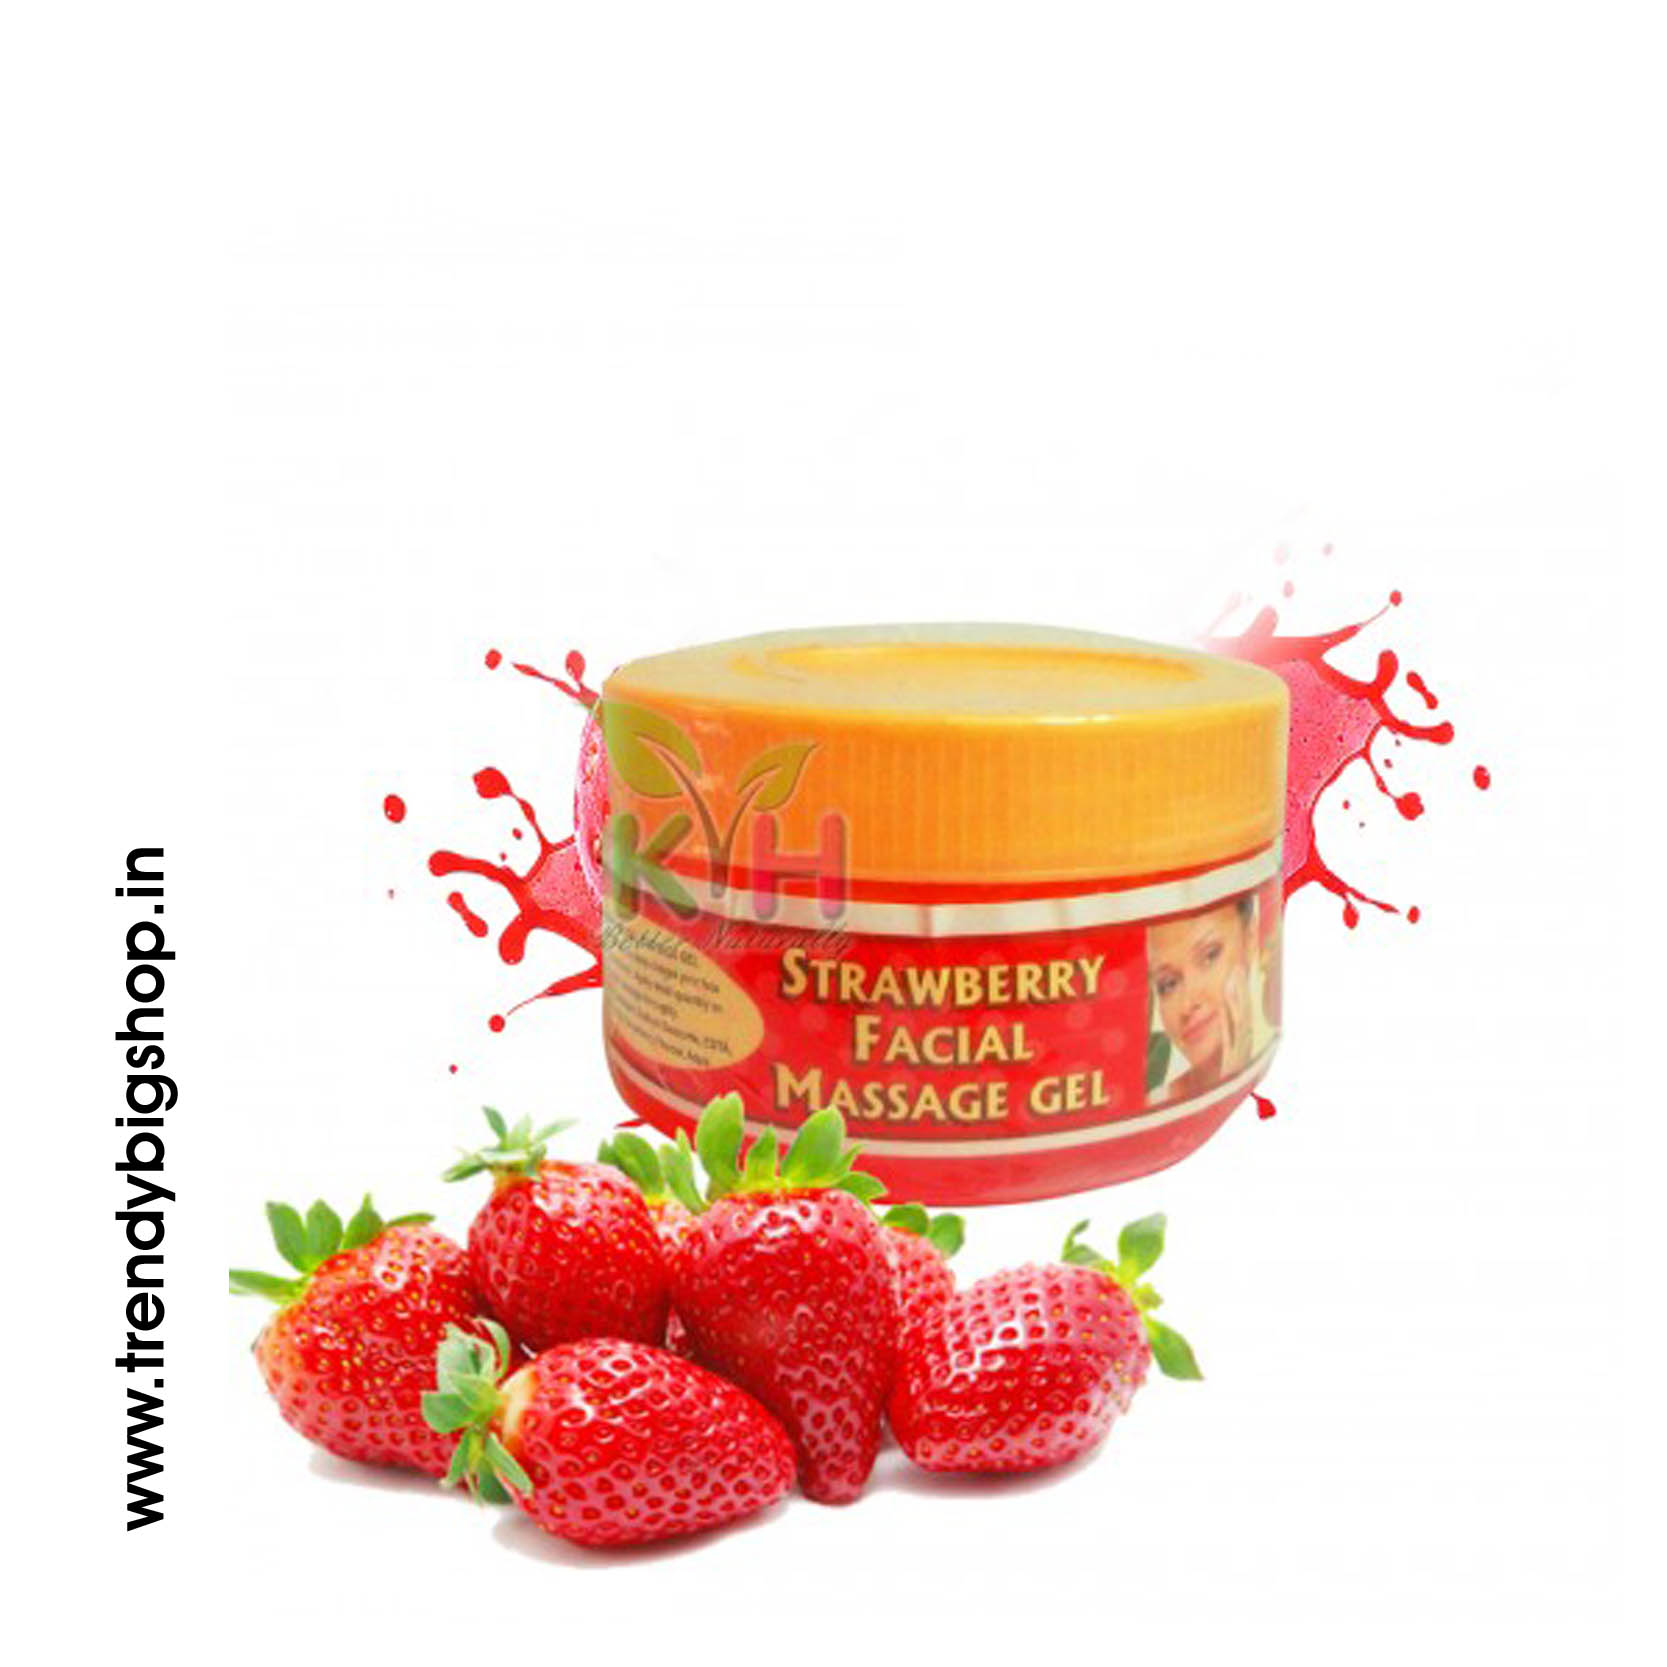 Strawberry Facial Massage Gel_500gm Natural and Organic Facial Massage product in Online shop Kodaikanal